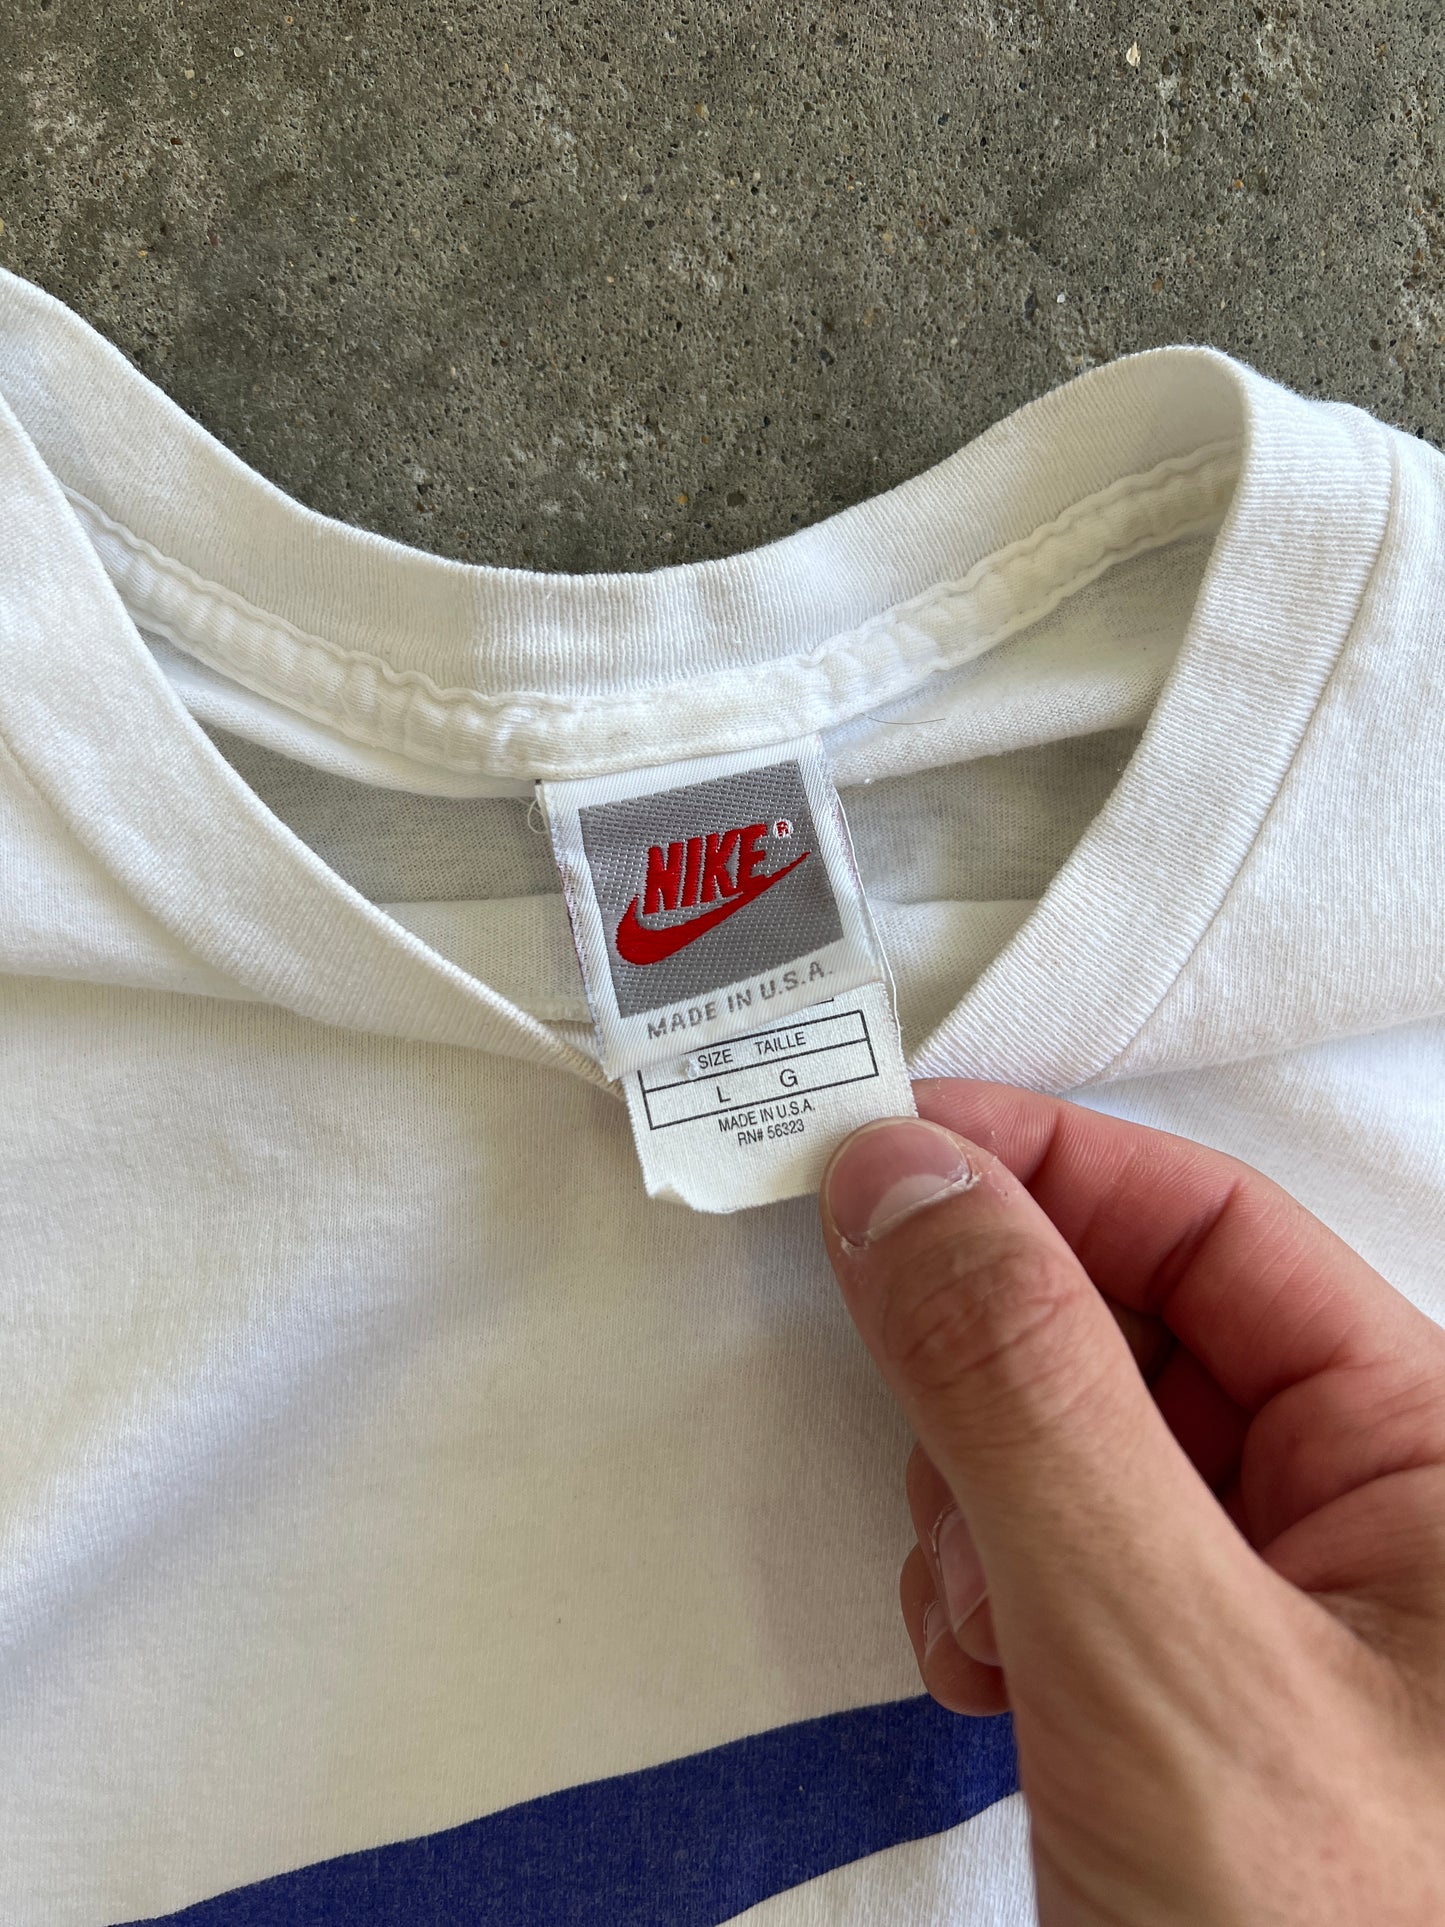 Vintage Big Swoosh Nike Shirt - L